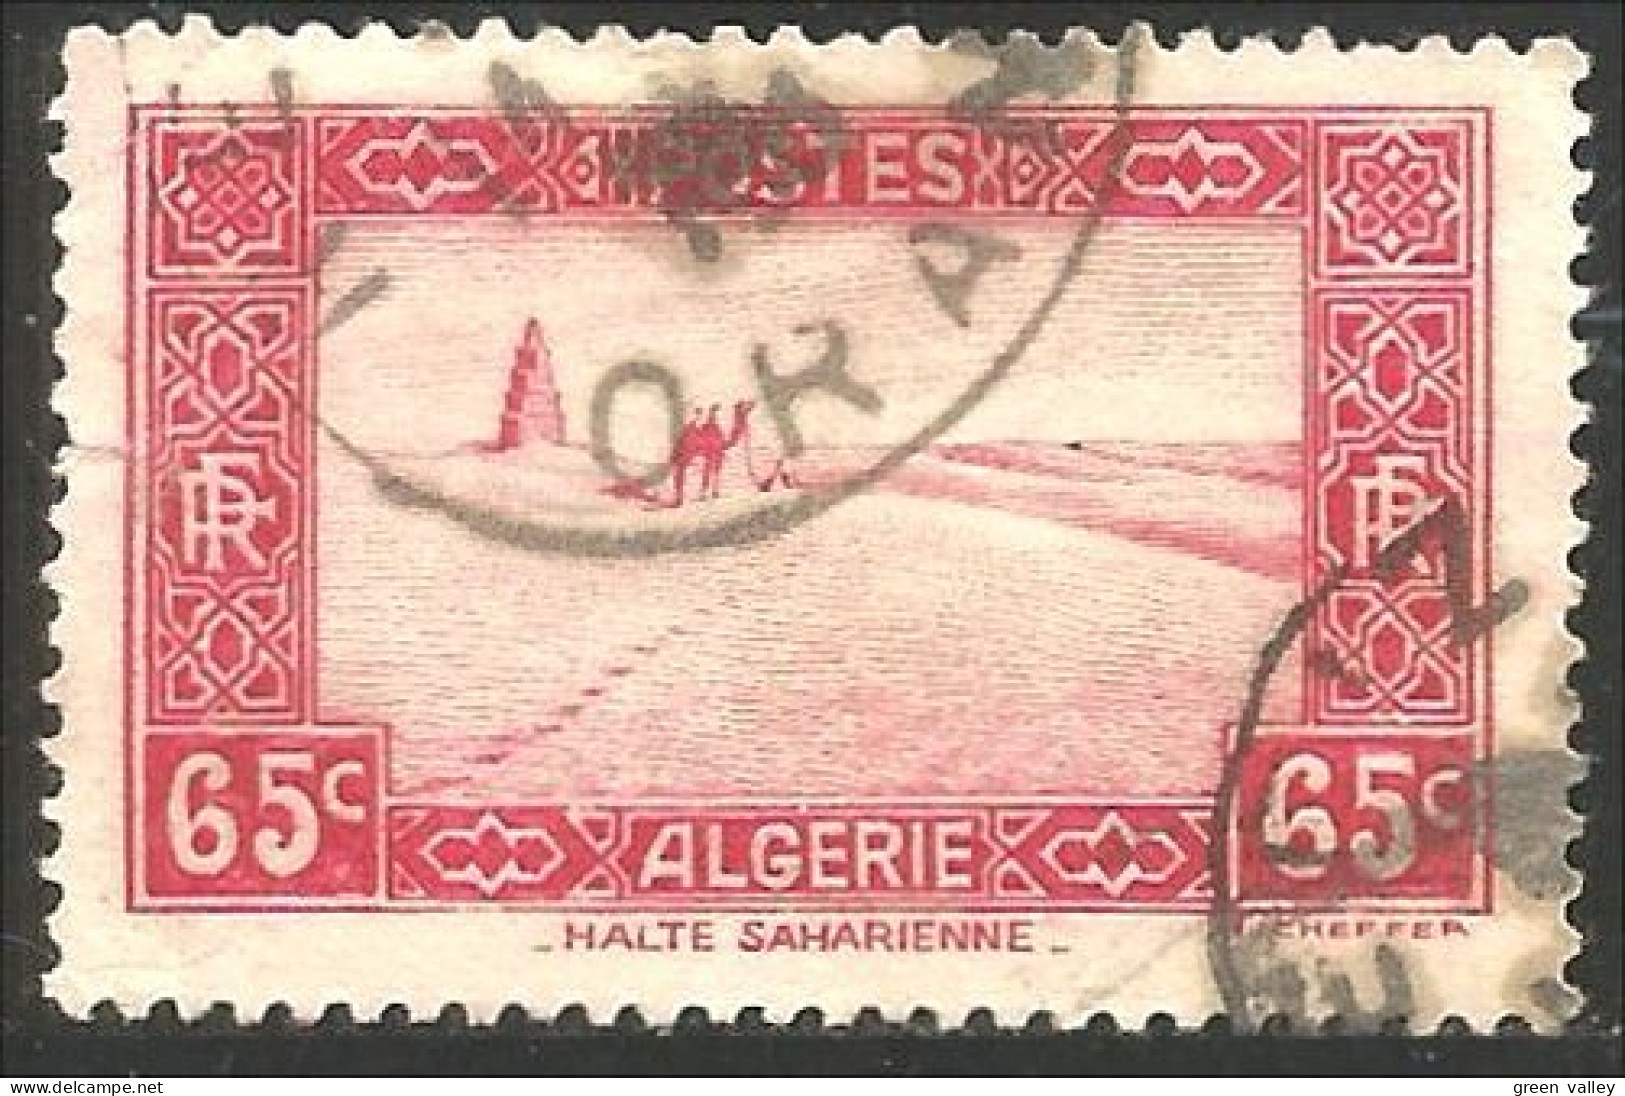 124 Algerie 65c Halte Saharienne Desert Sahara (ALG-181) - Usati